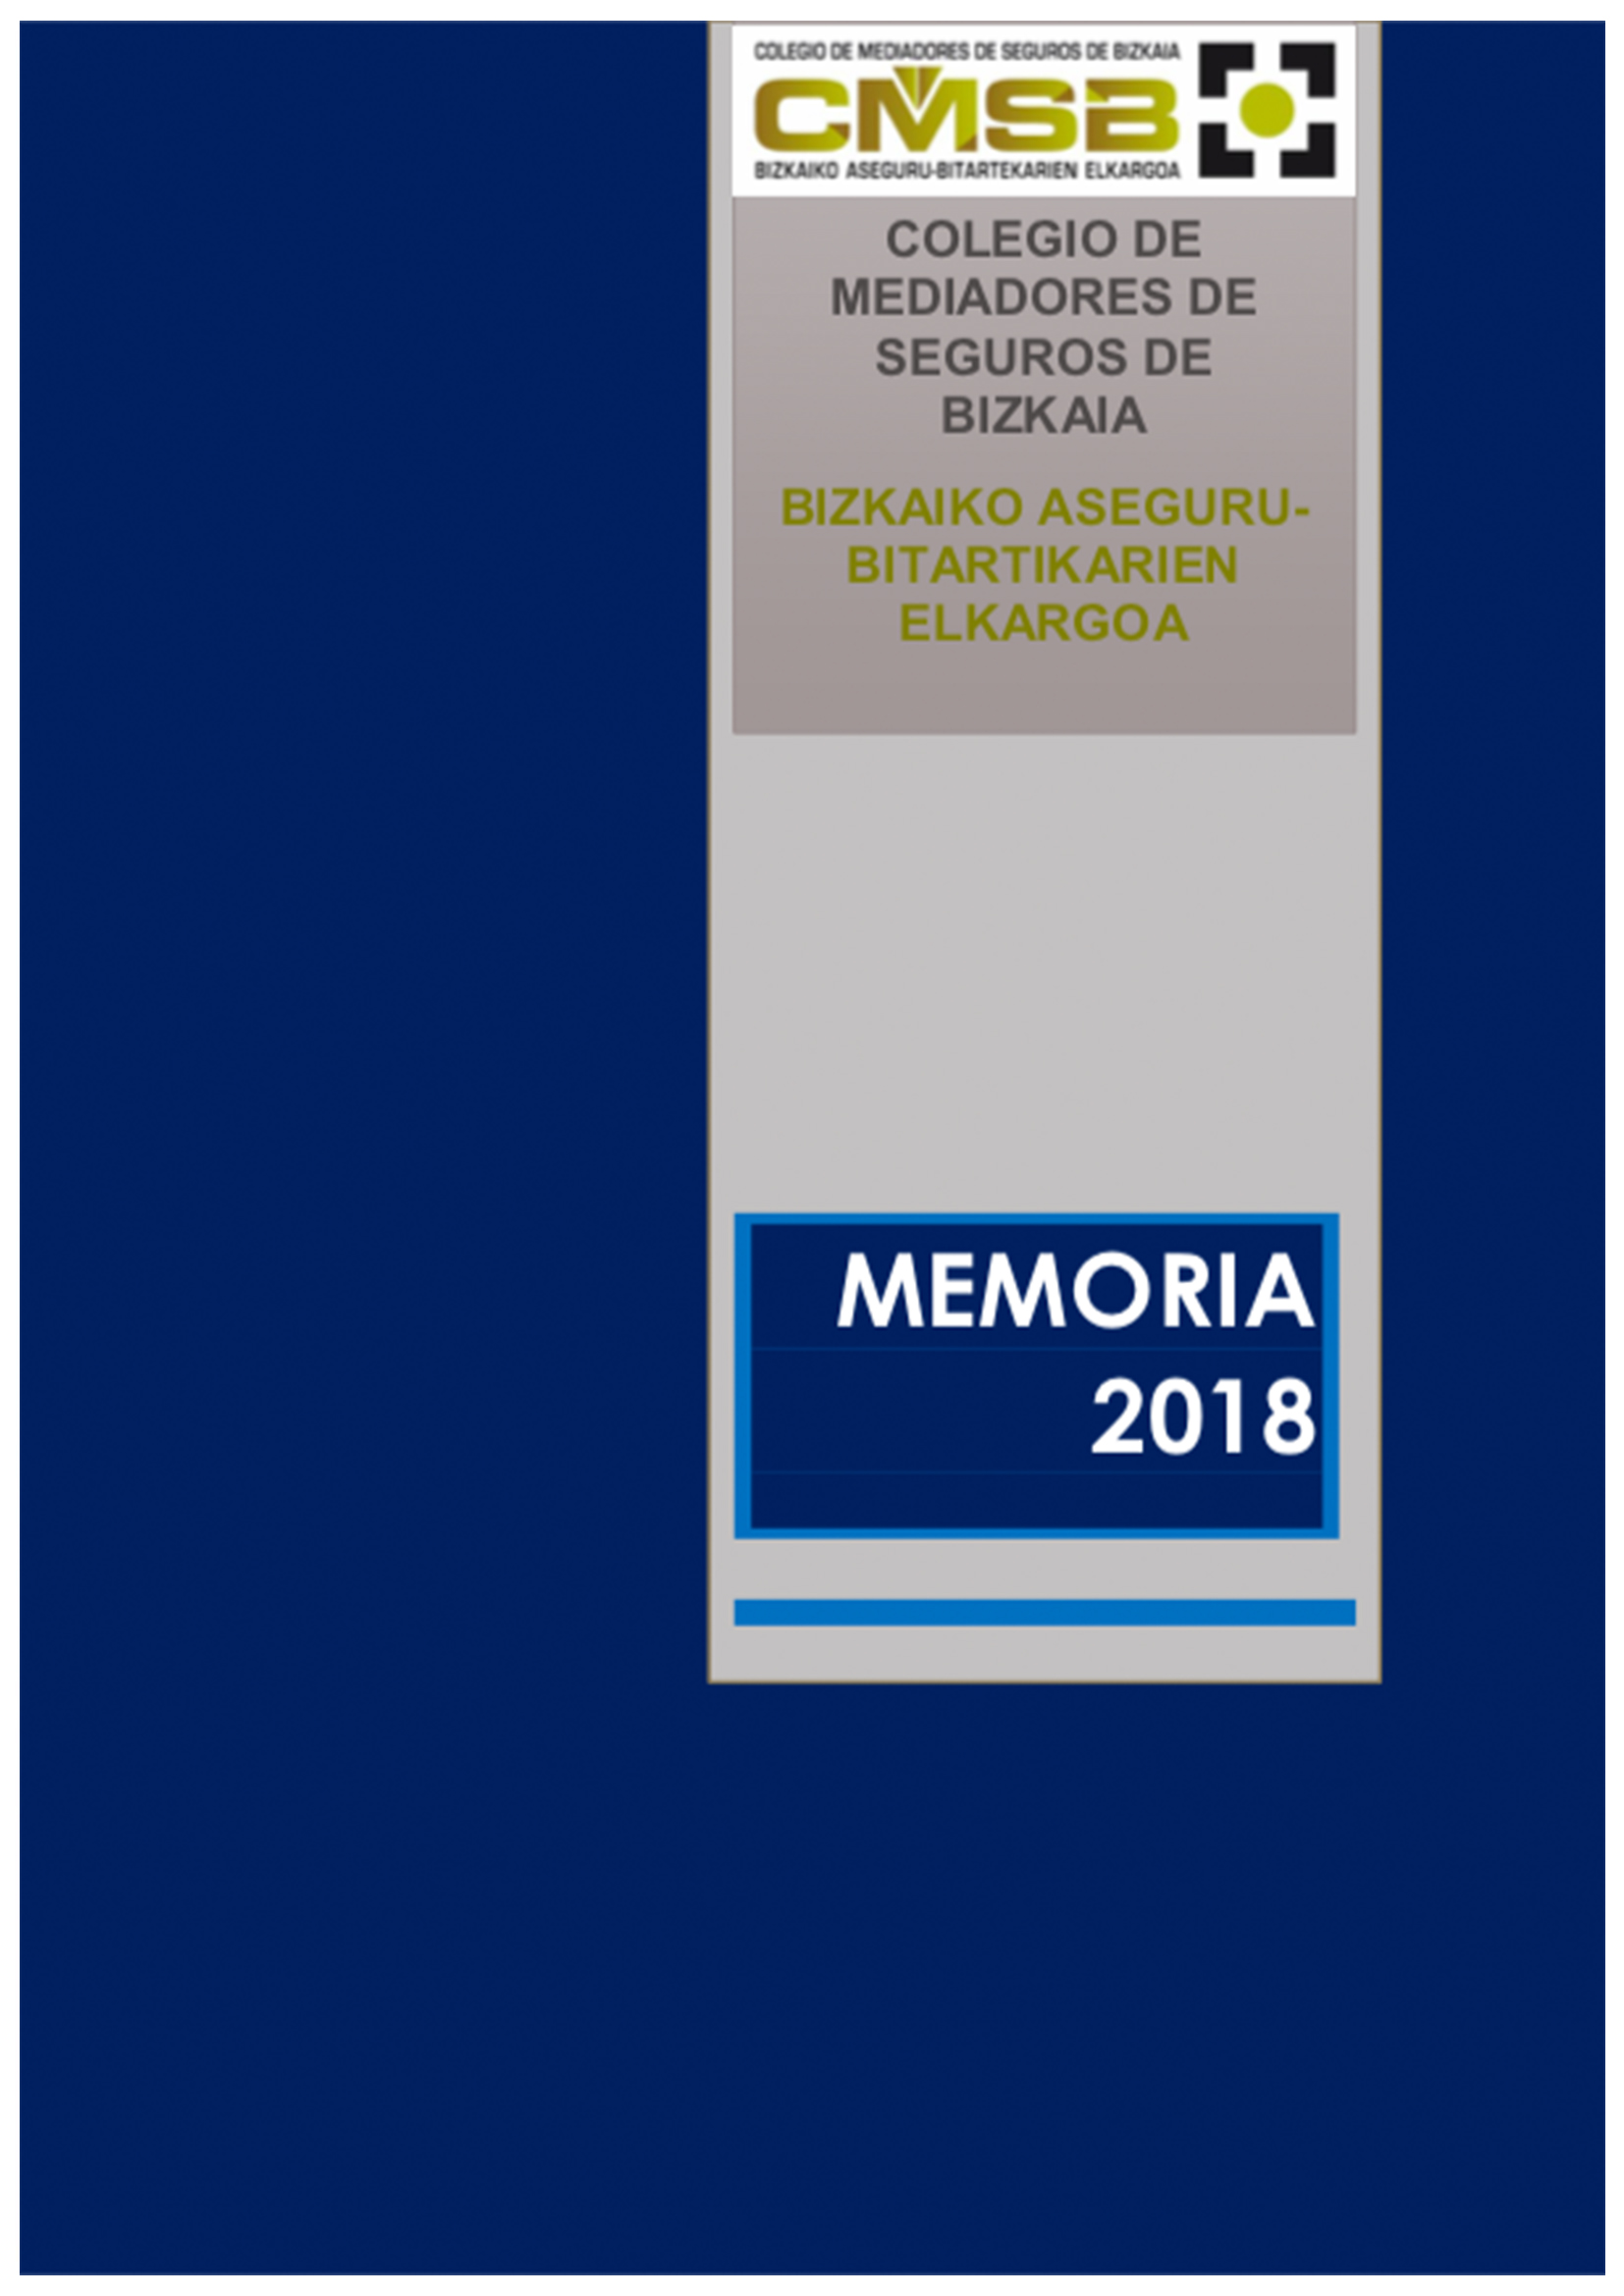 CMSAB - Memoria 2016